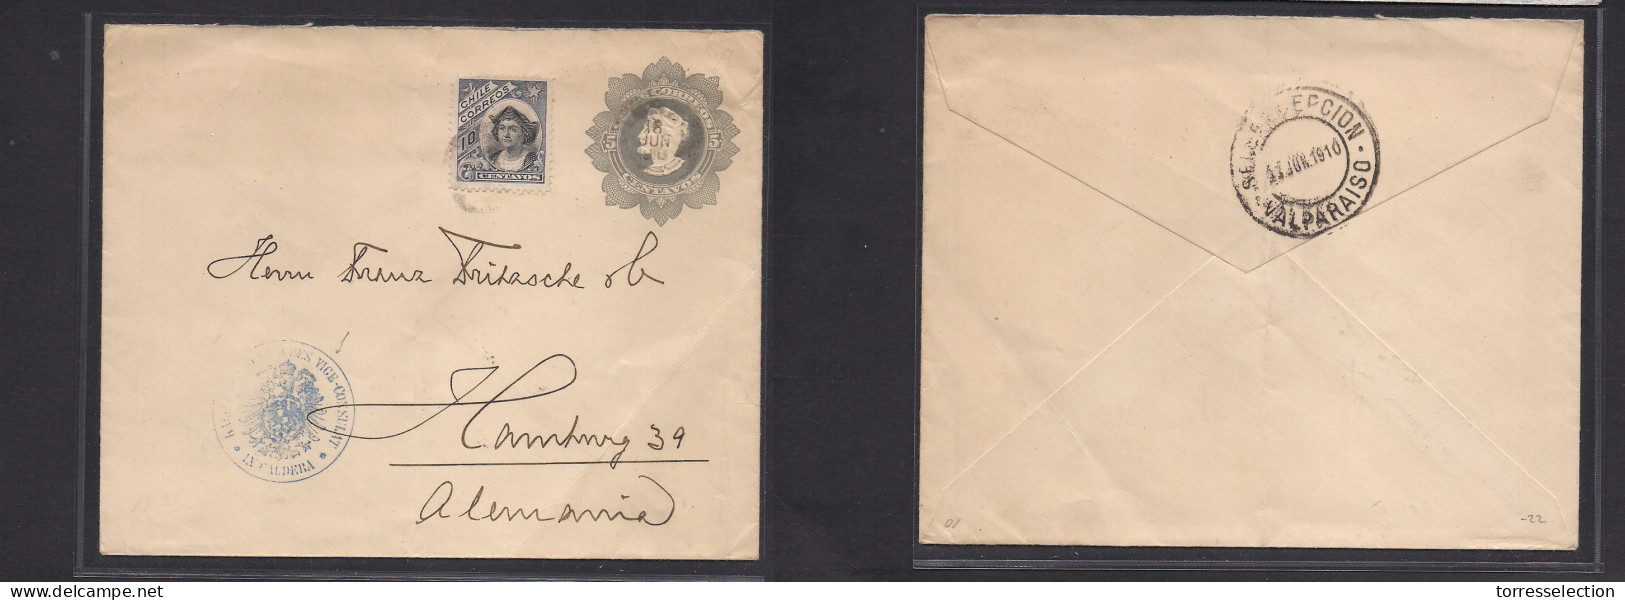 CHILE - Stationery. 1910 (16 June) Caldera - Germany, Hamburg Via Valp German Consular Mail Cachet 5c Grey Stat Env + 10 - Chile